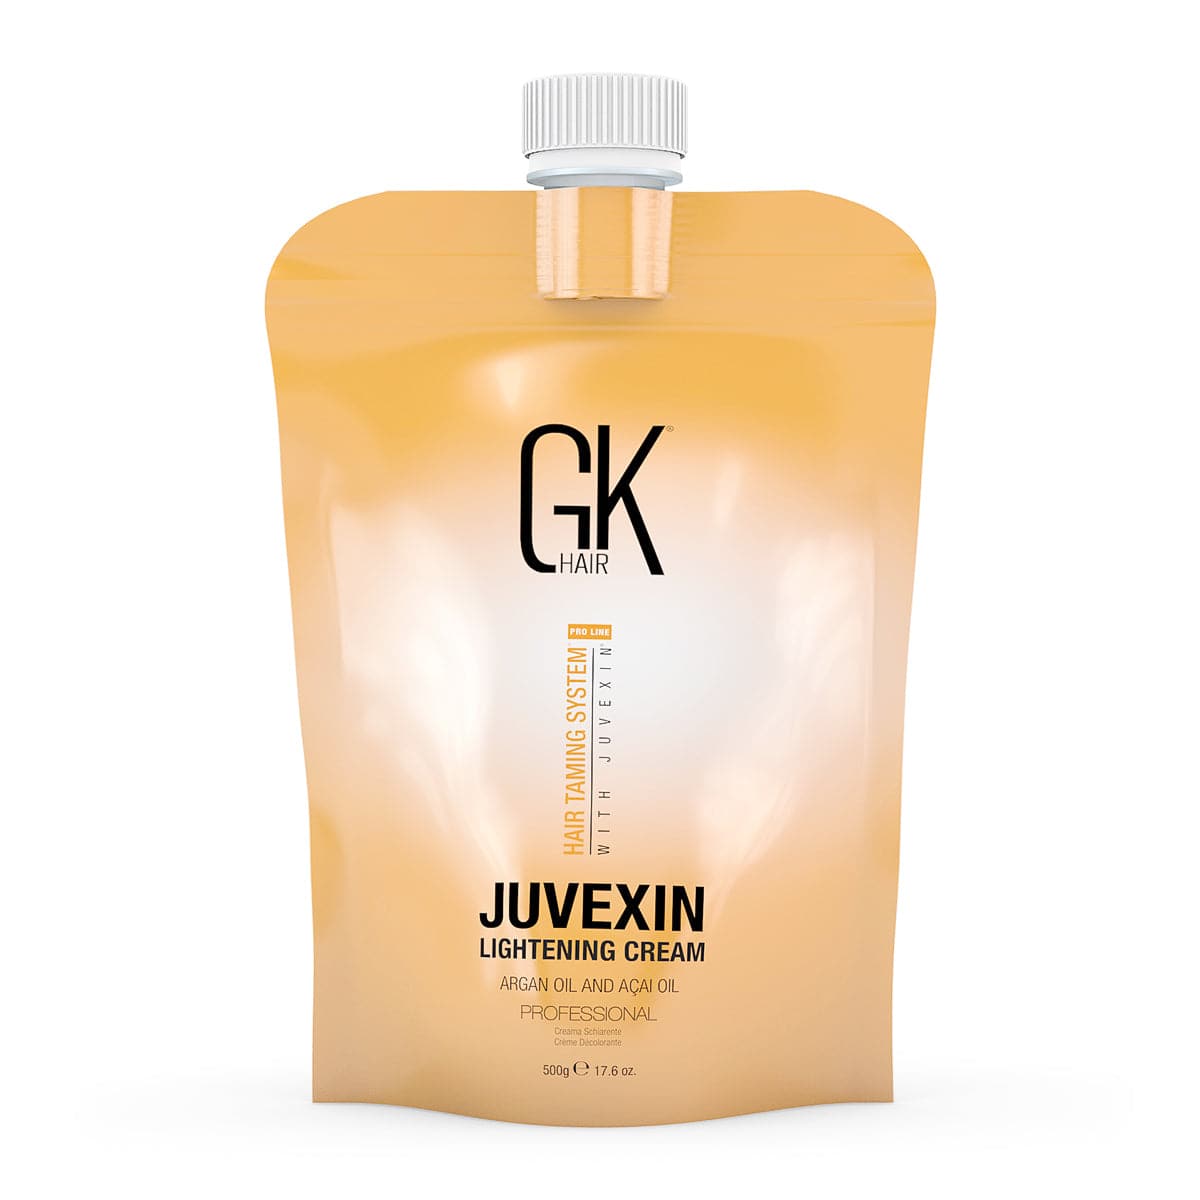 Juvexin Lightening Cream | GK Hair Product